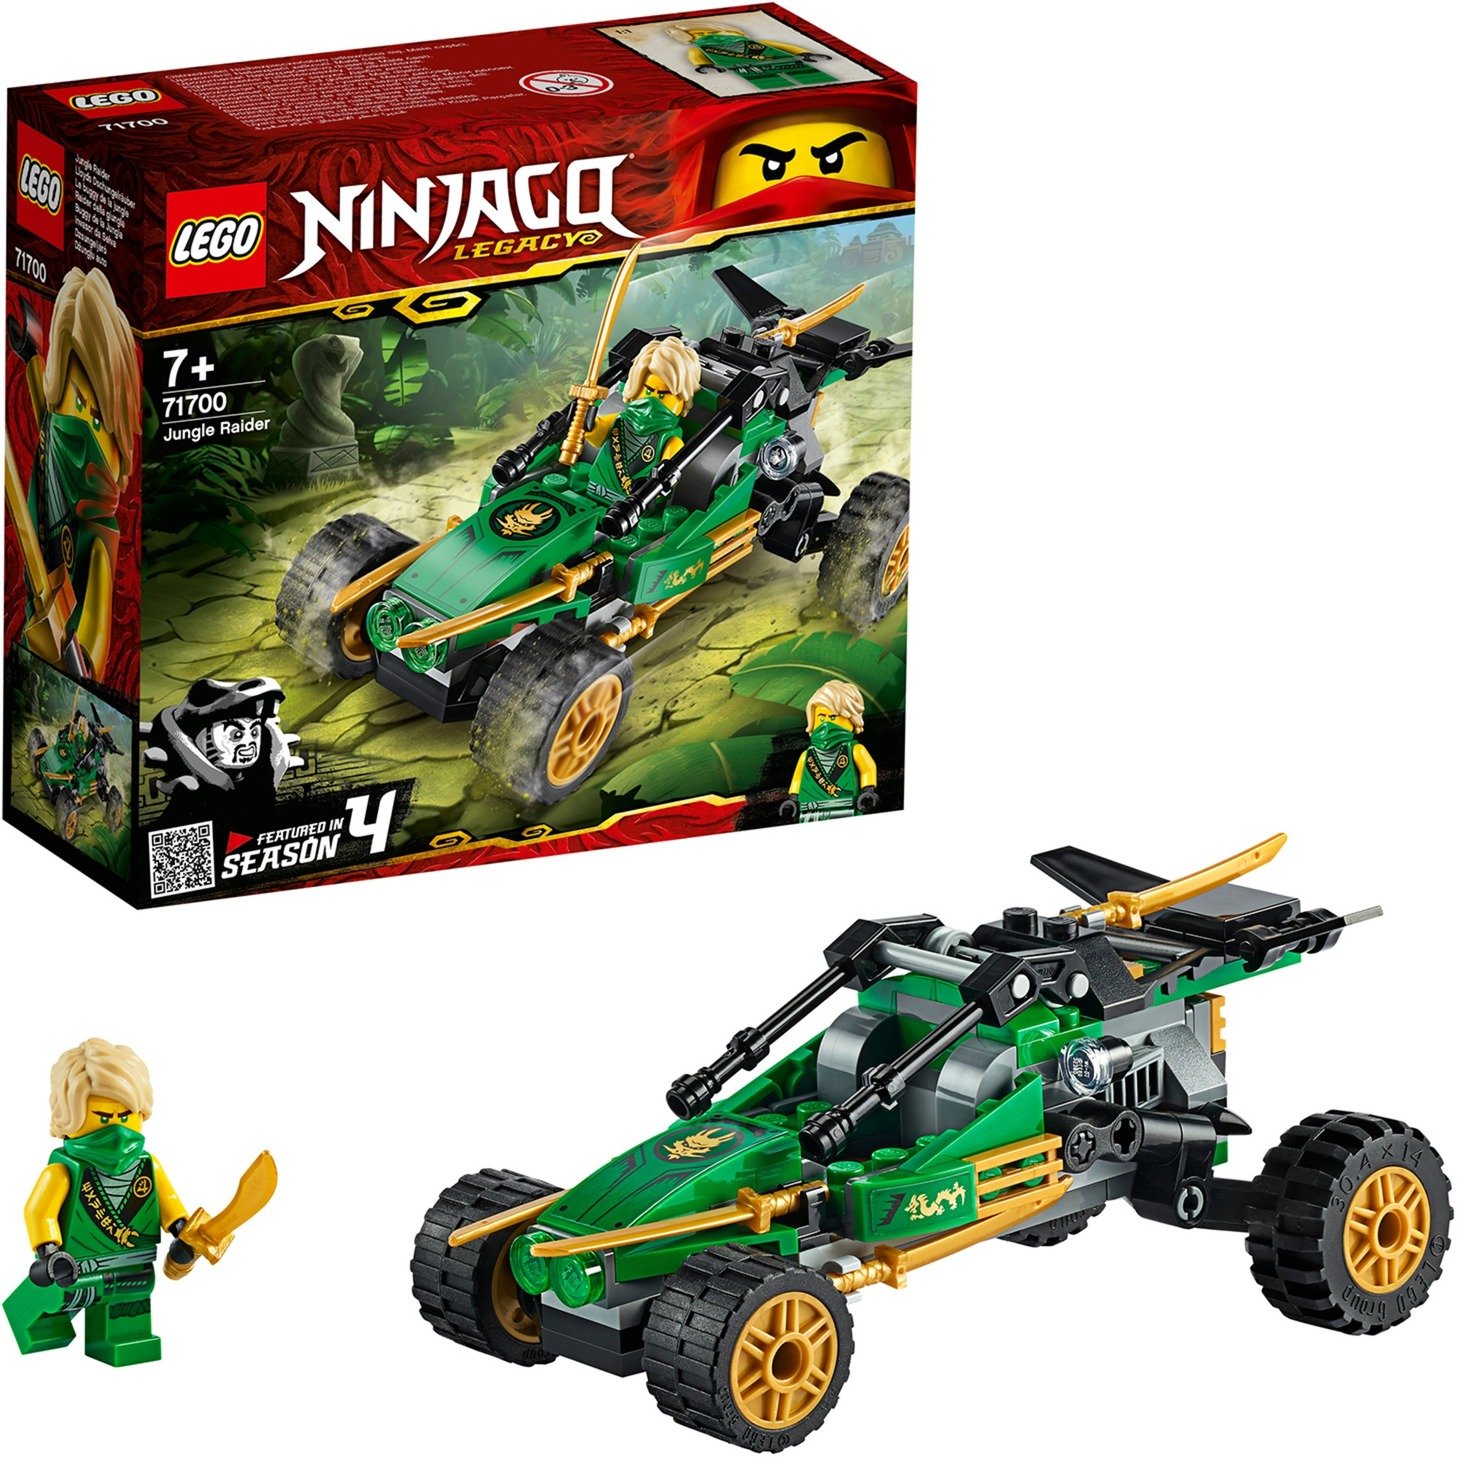 Spielzeug: Lego 71700 Ninjago Lloyds Dschungelräuber